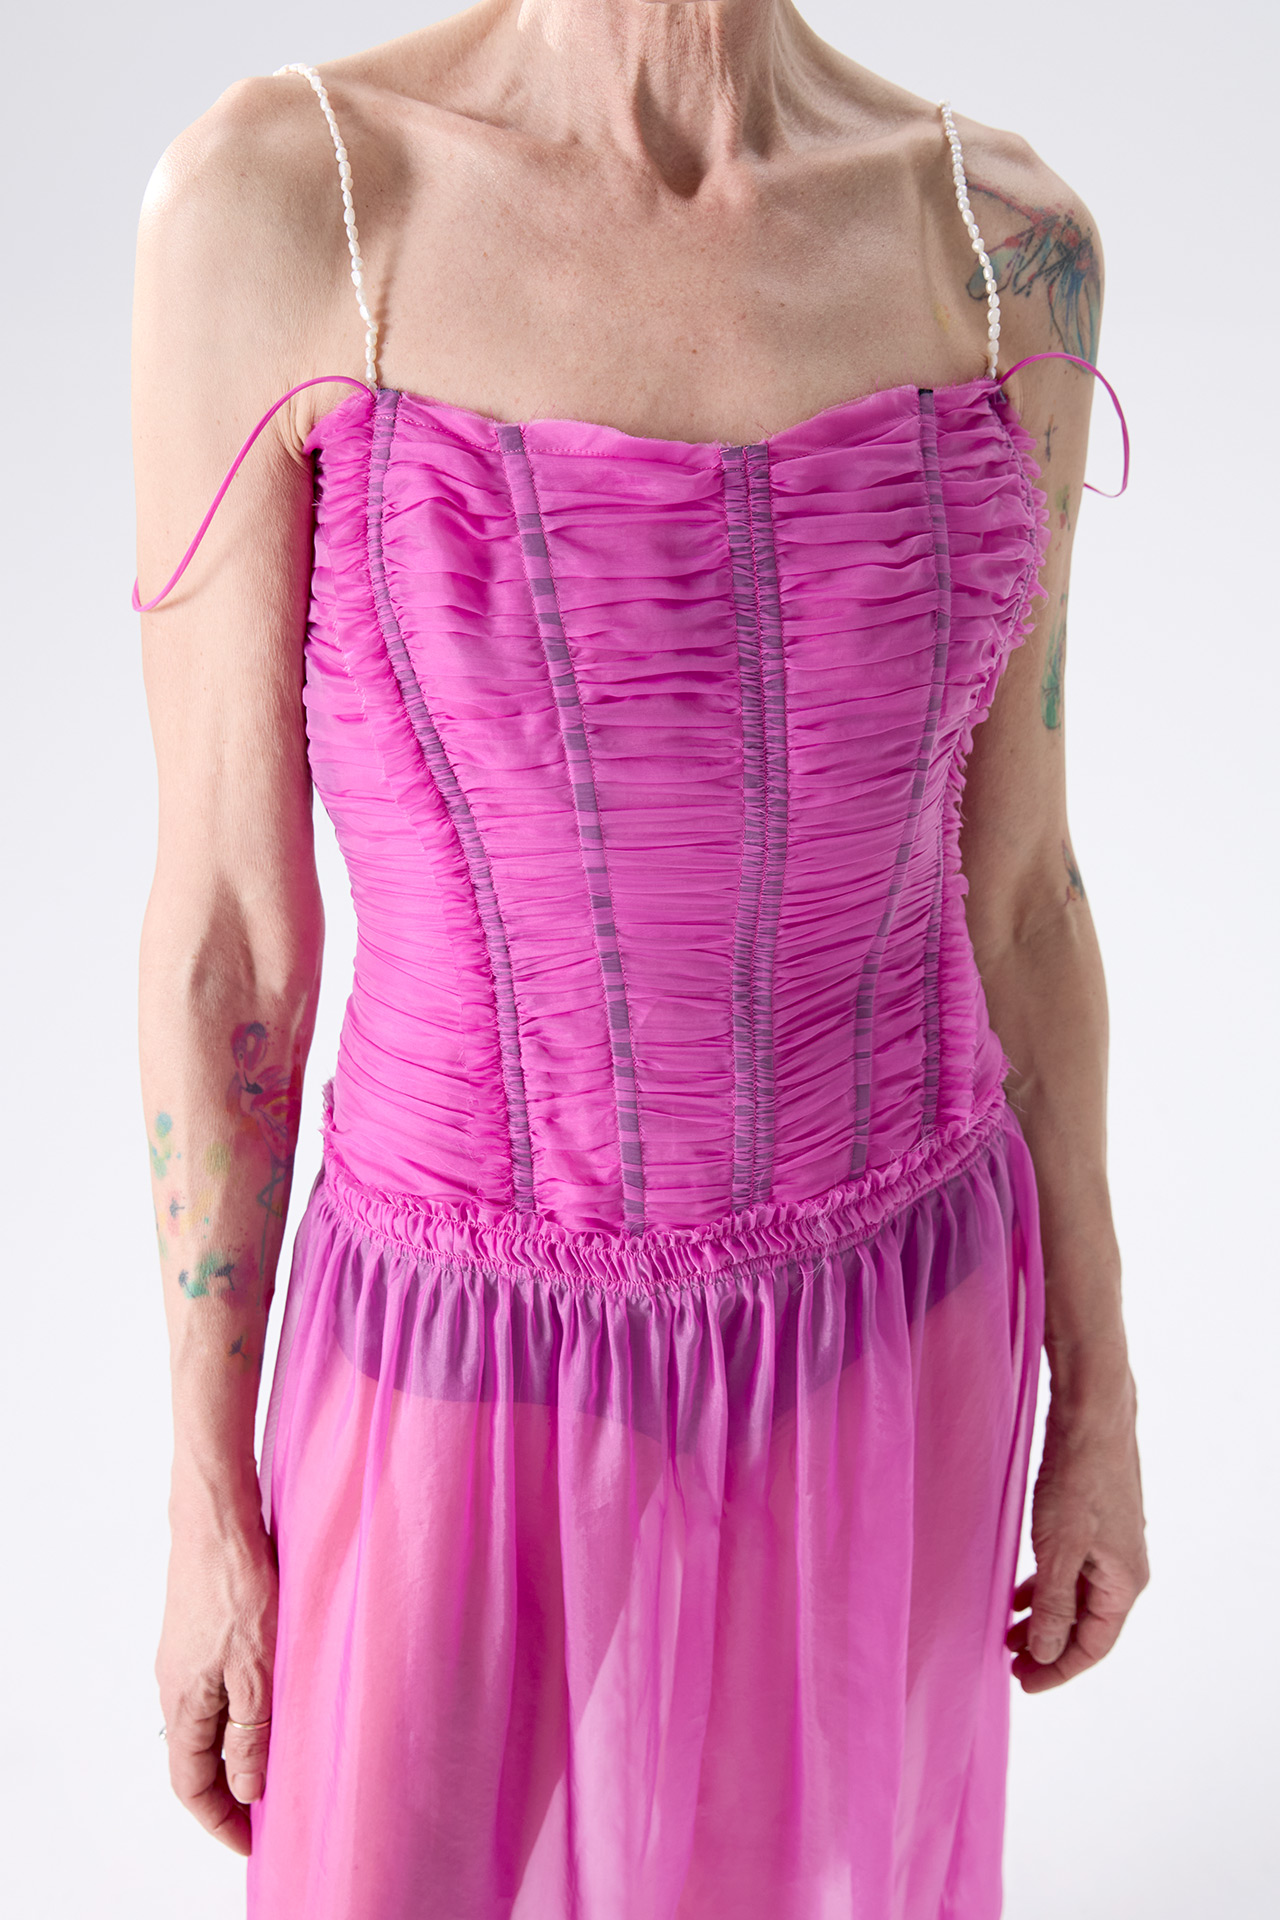 Franca Spain Miista Europe | in | Pink Made Dress